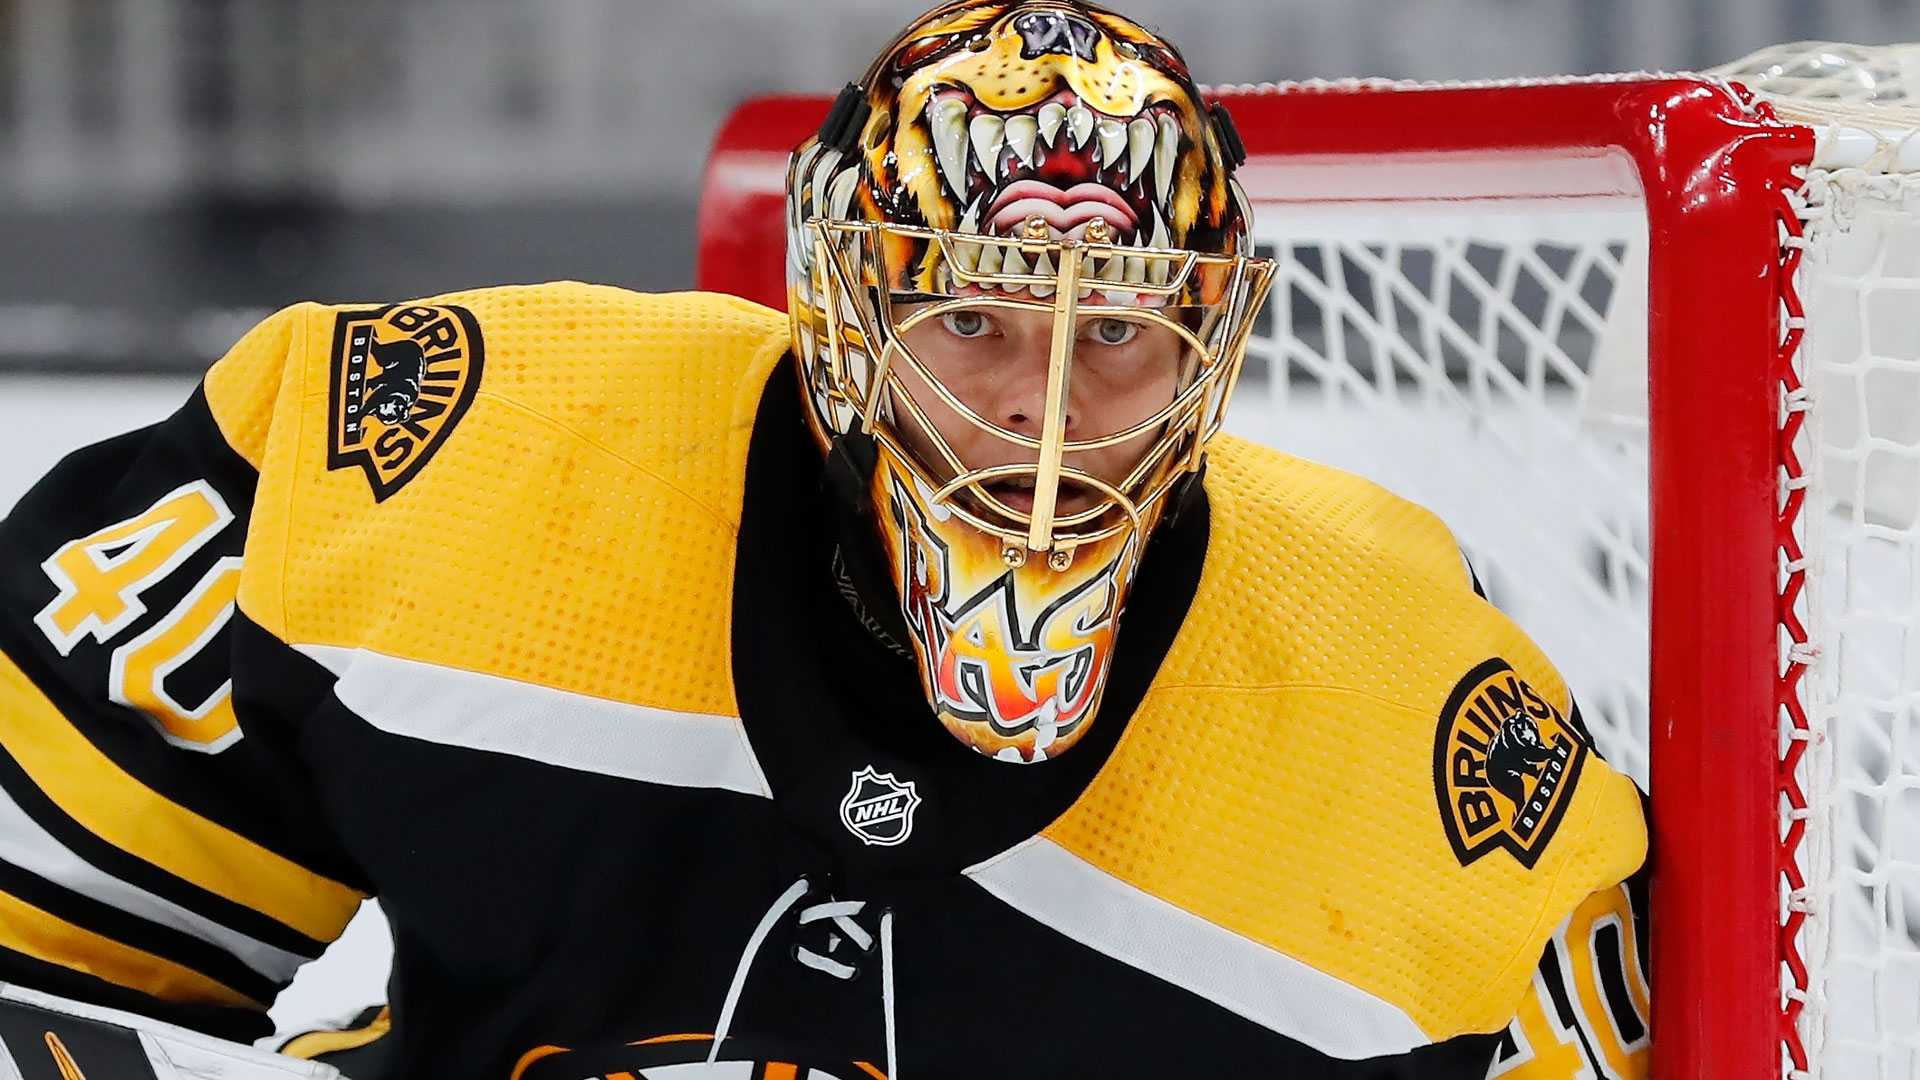 Bruins hope to have goalie Tuukka Rask return on Tuesday